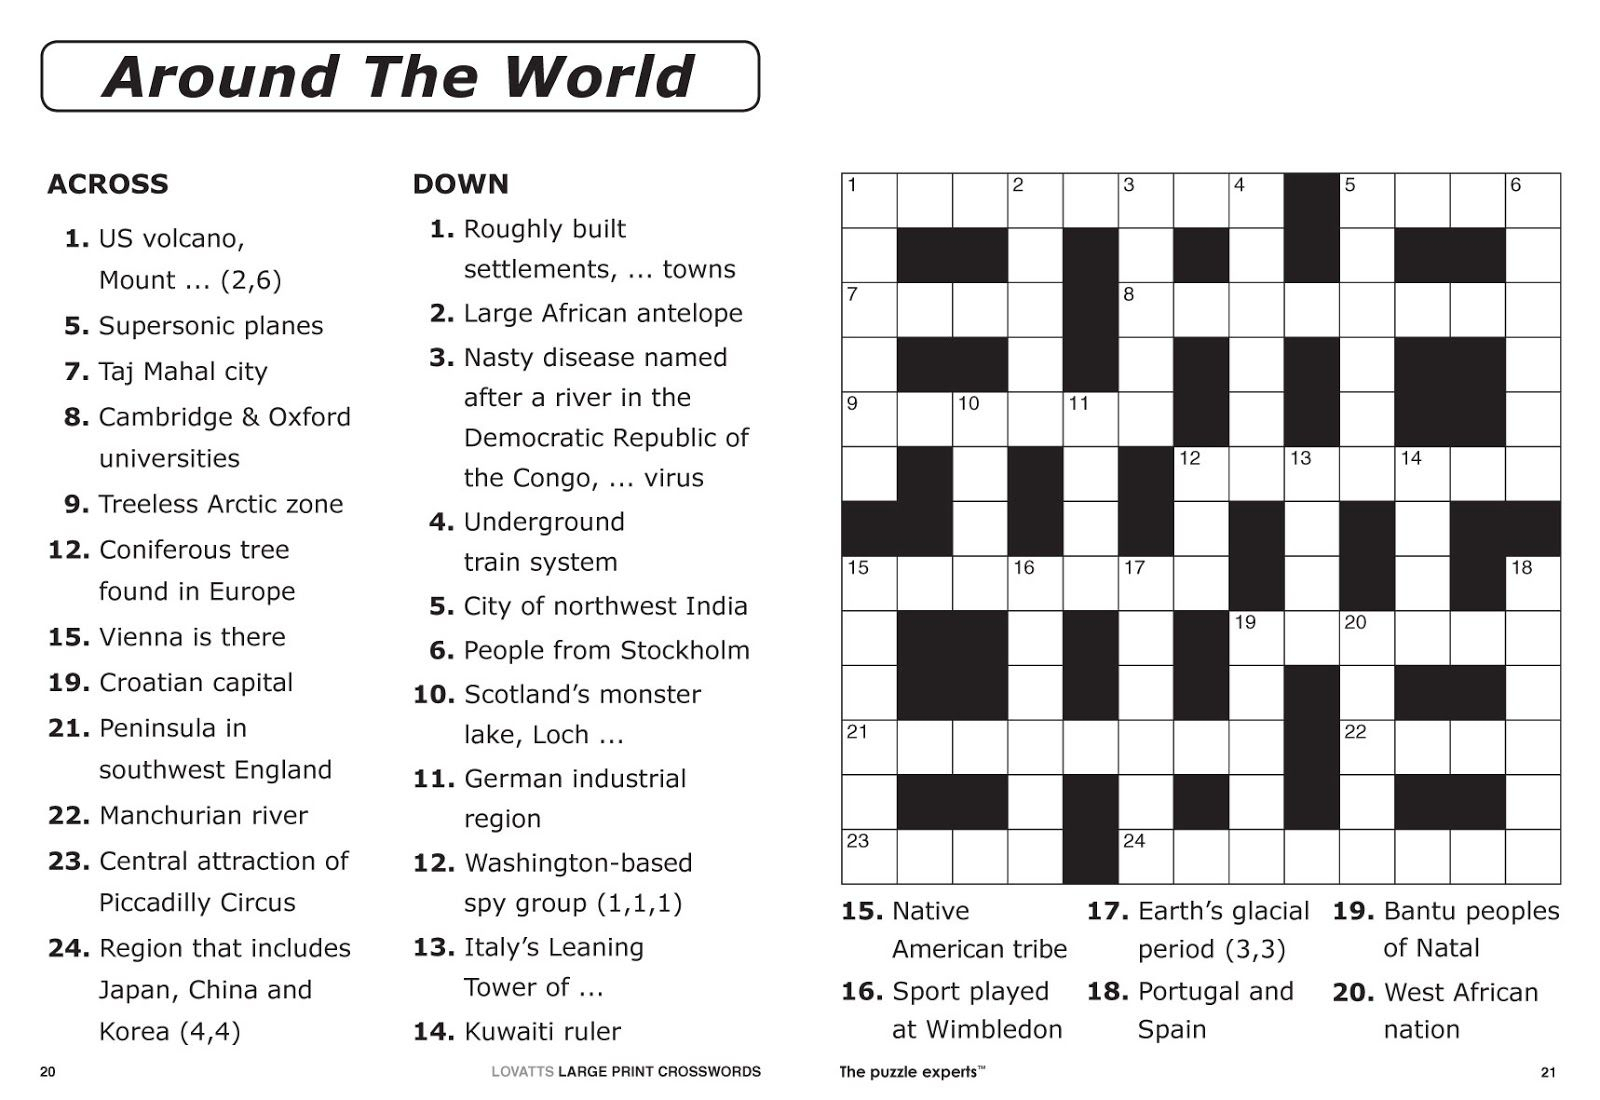 Free Printable Large Print Crossword Puzzles | M3U8 - Printable Crossword Puzzles No Download